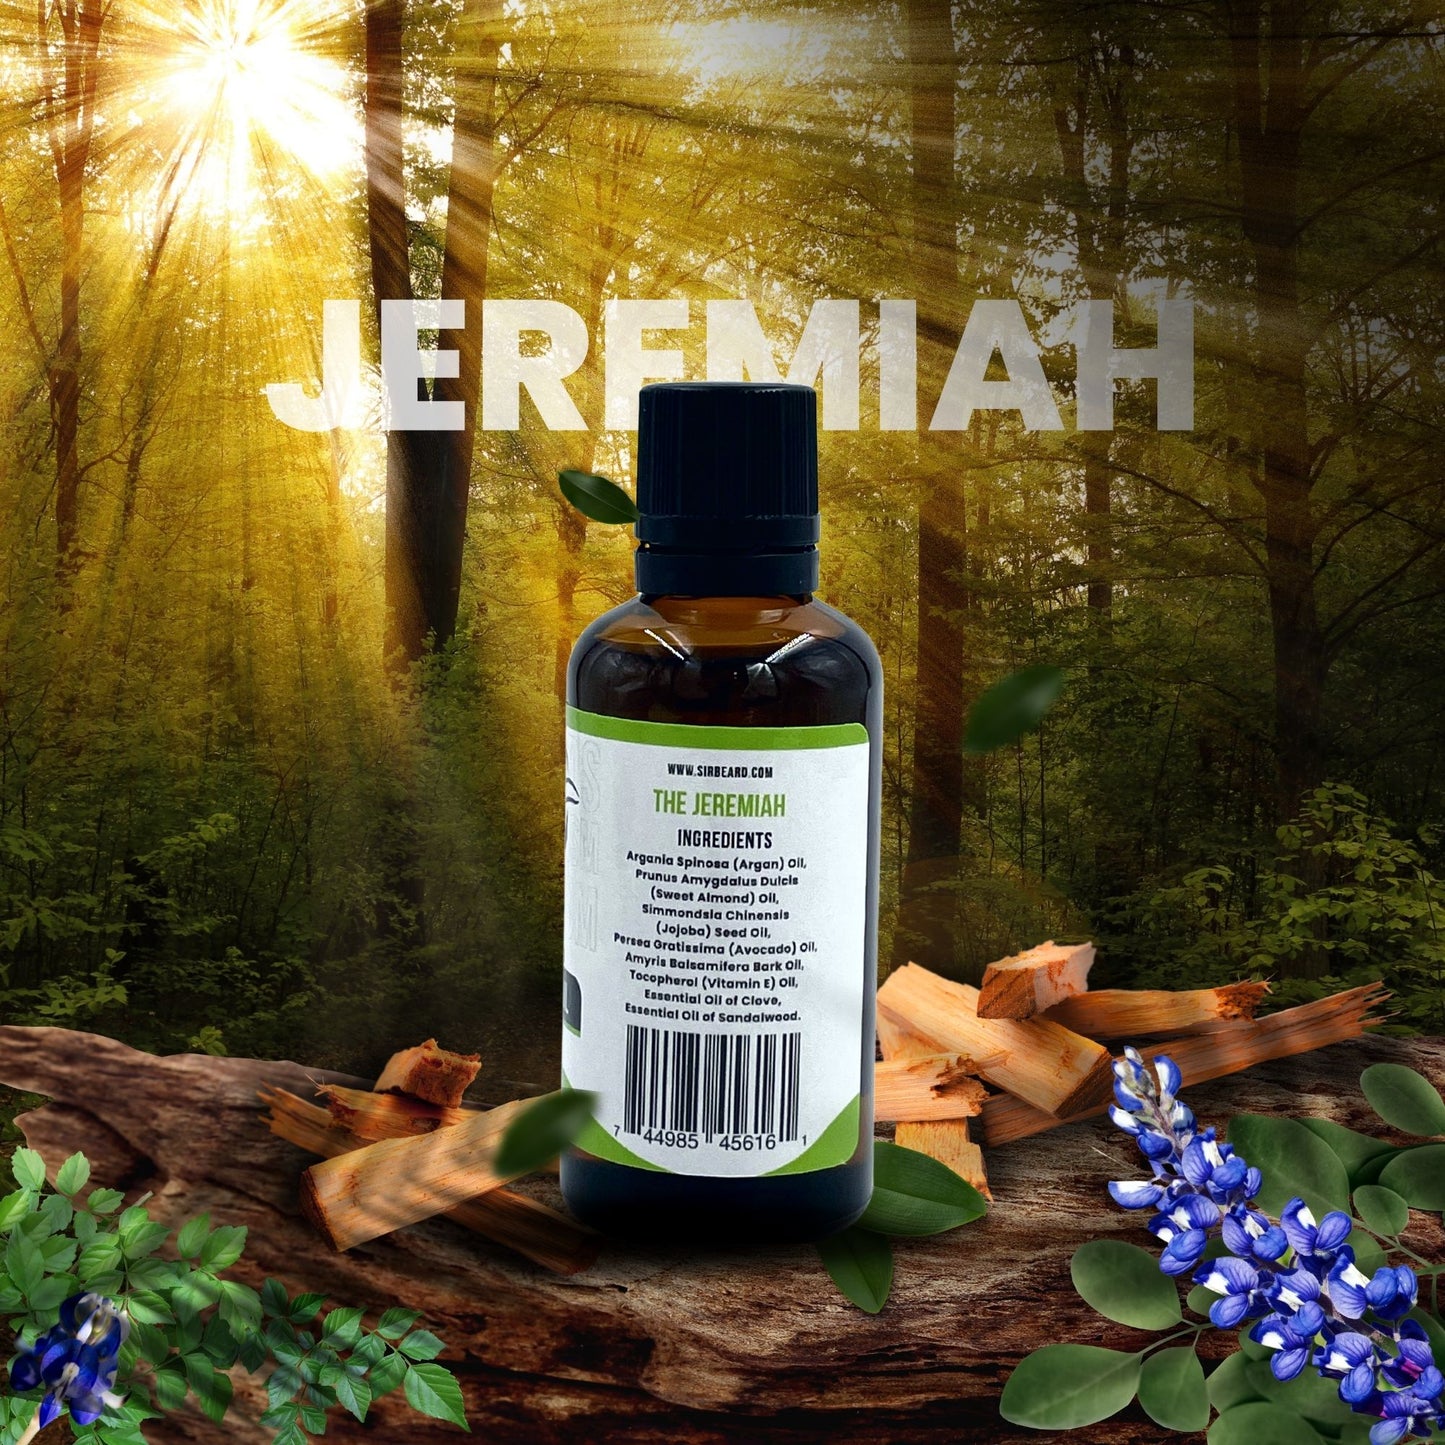 Sir Beard Texas Beard Oil Ingredients (The Jeremiah)